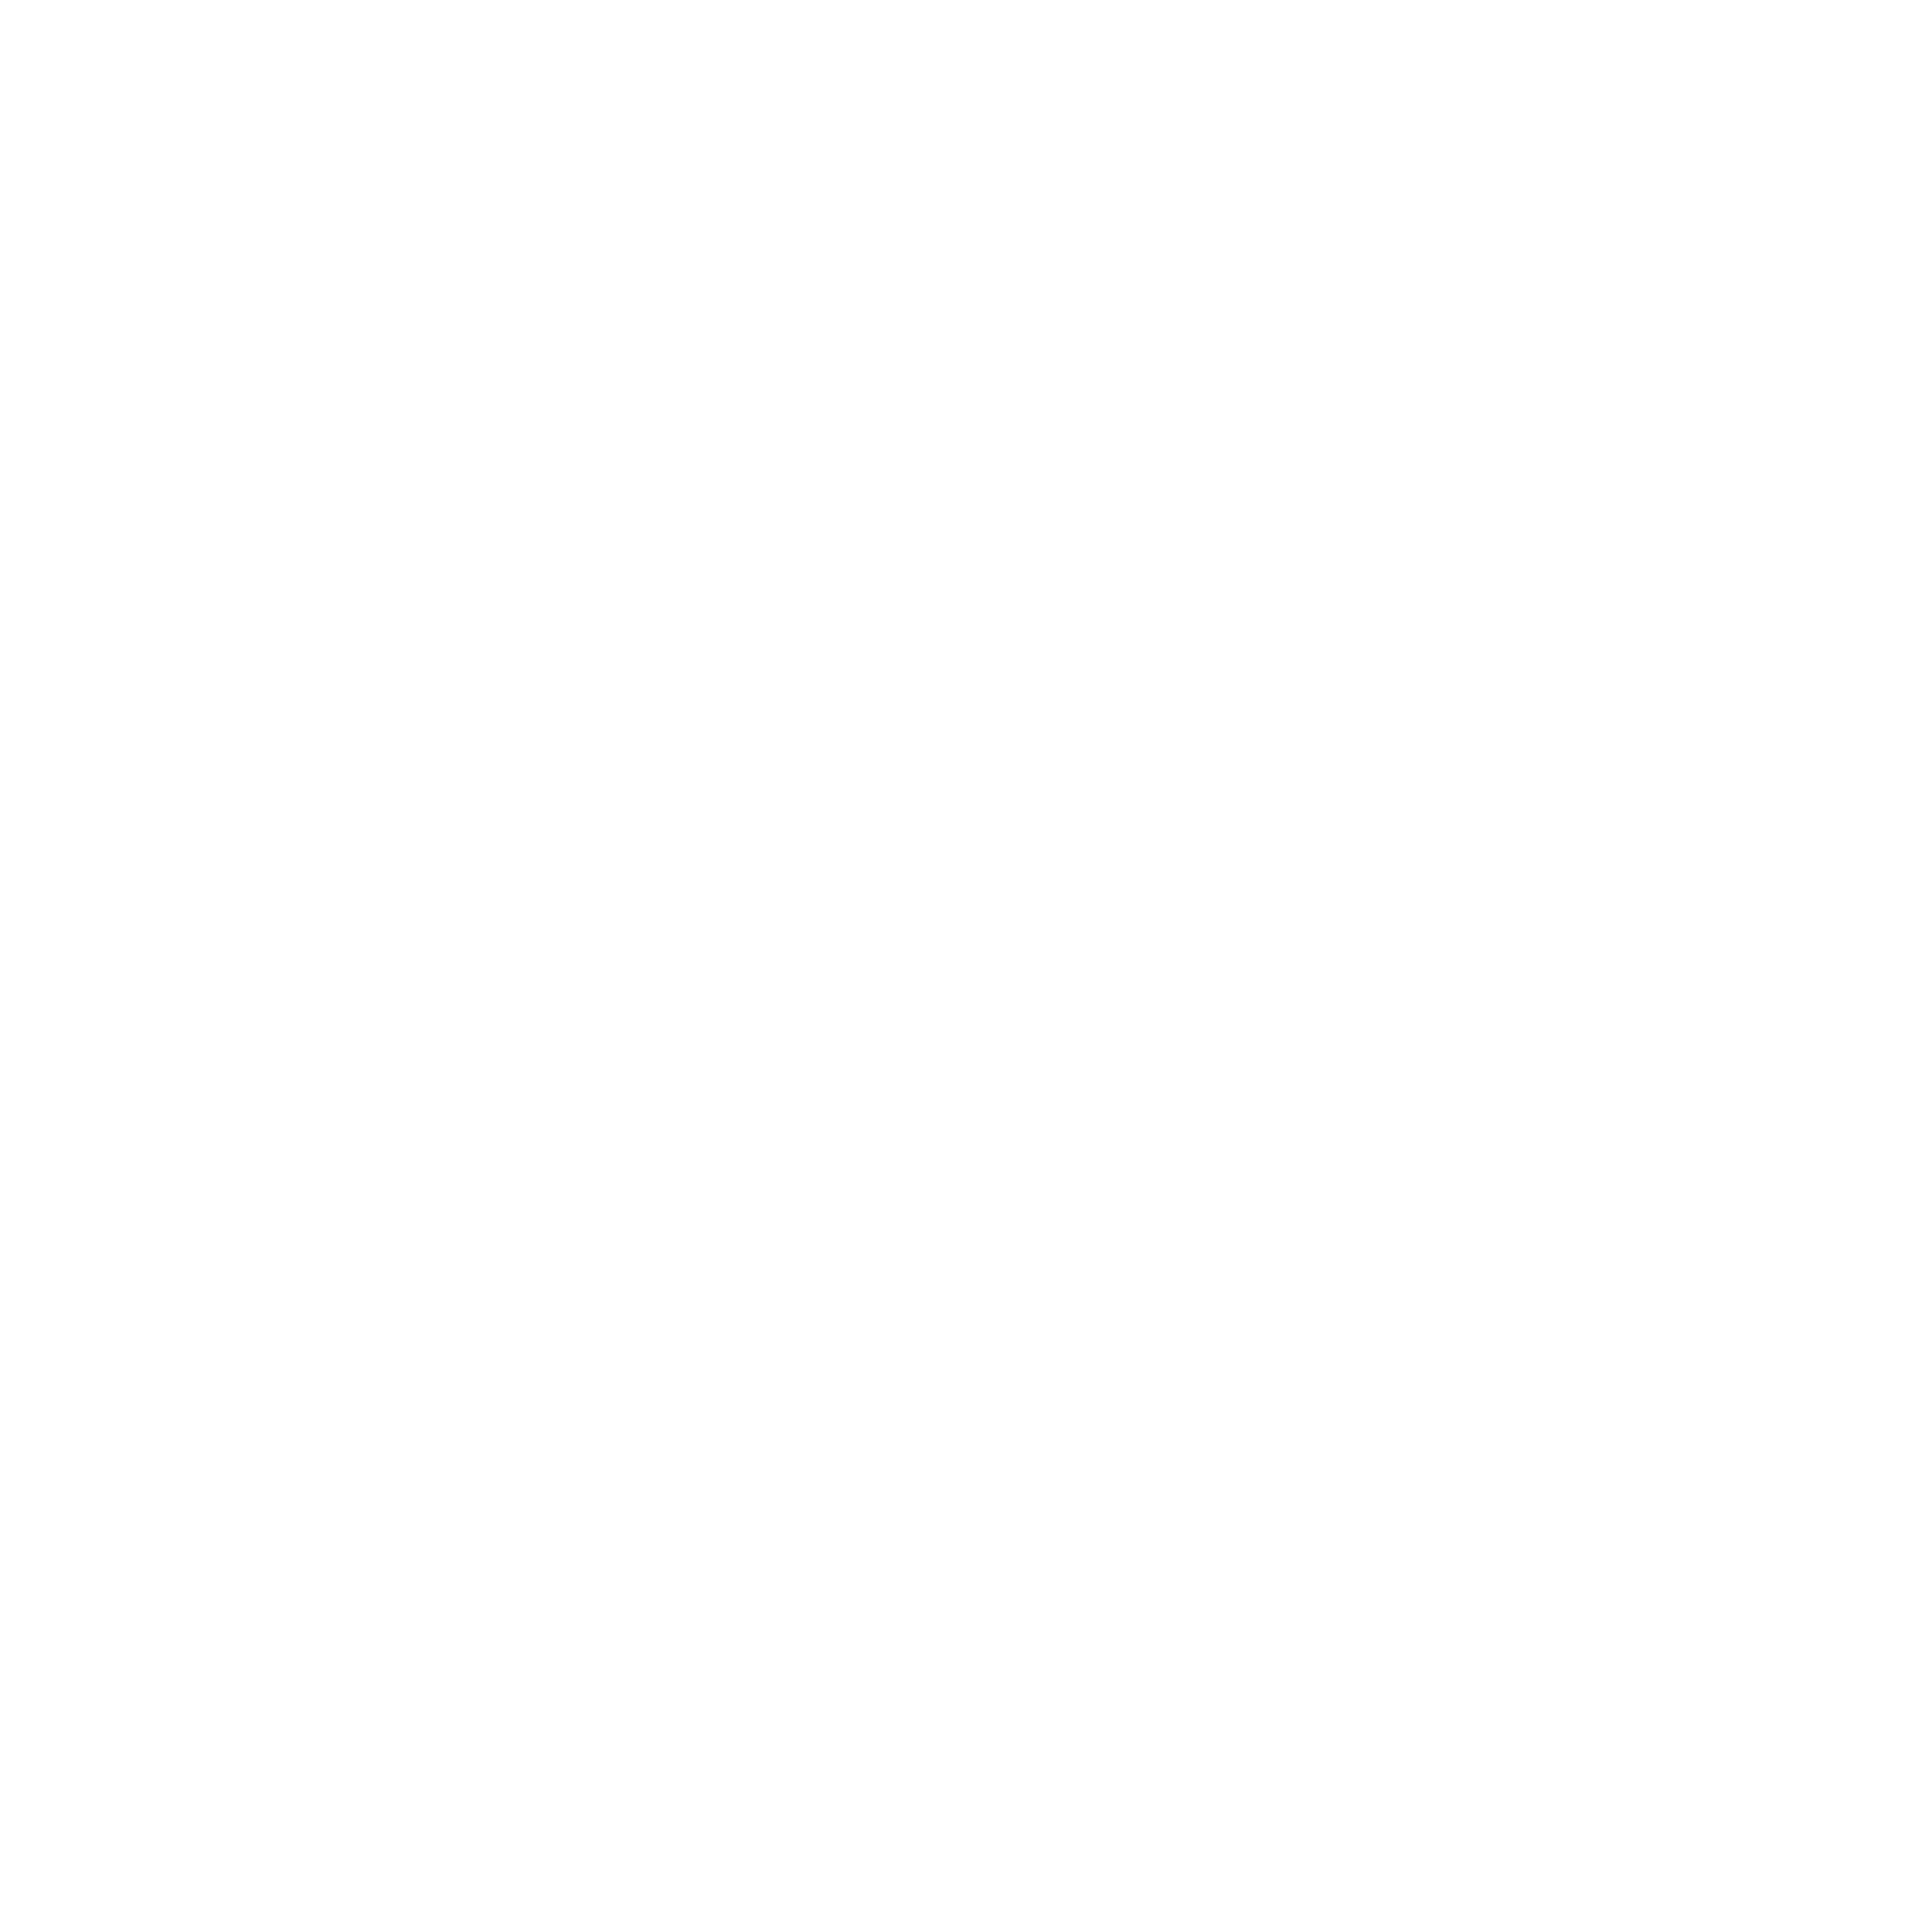 OhioHealth Logo - OhioHealth Logo PNG Transparent & SVG Vector - Freebie Supply